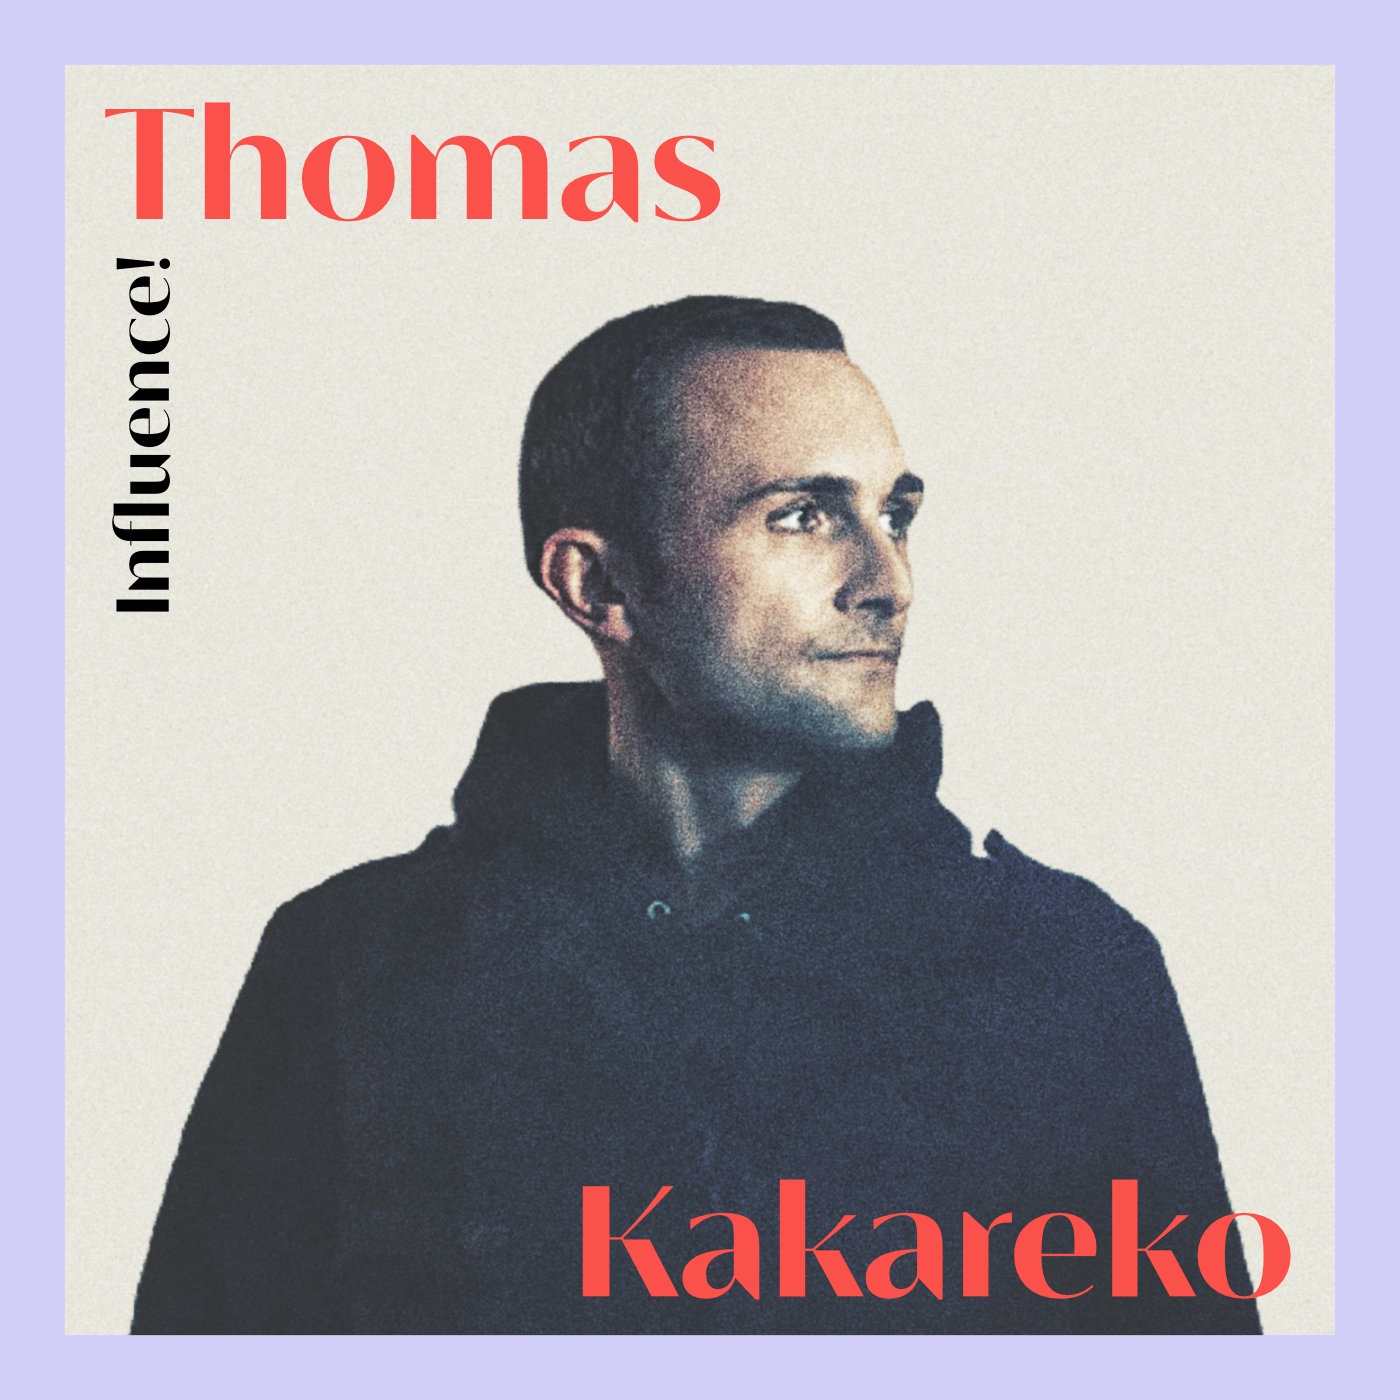 #79 | Thomas Kakareko, wie kommen Instagram Creator durch die Krise?